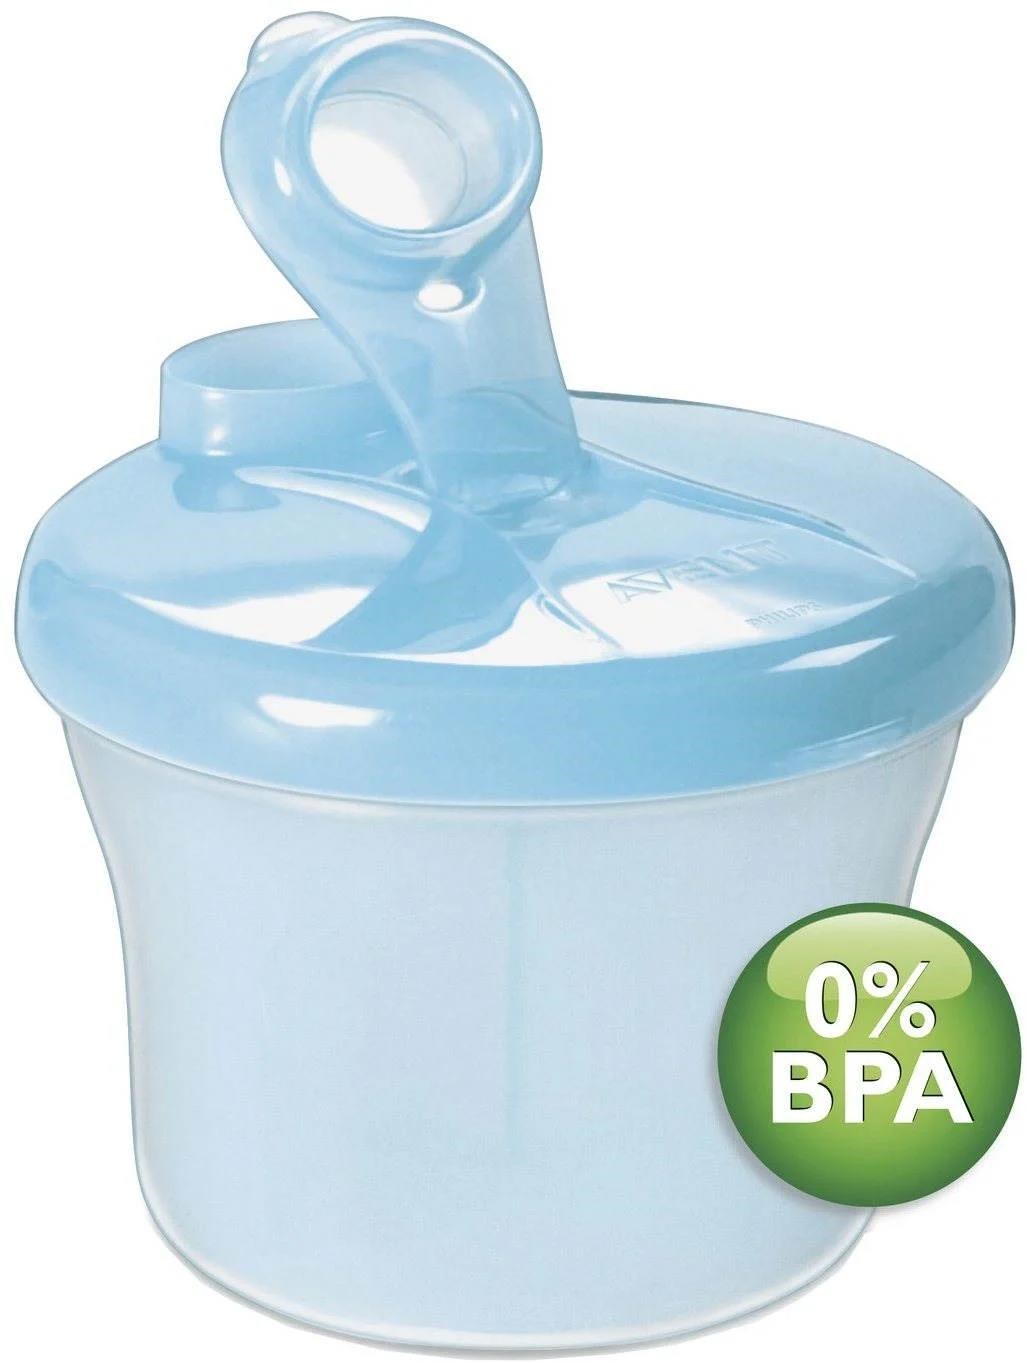 Philips Avent SCF135/ 06 dávkovač sušeného mléka,  3 dávky,  bez BPA0 